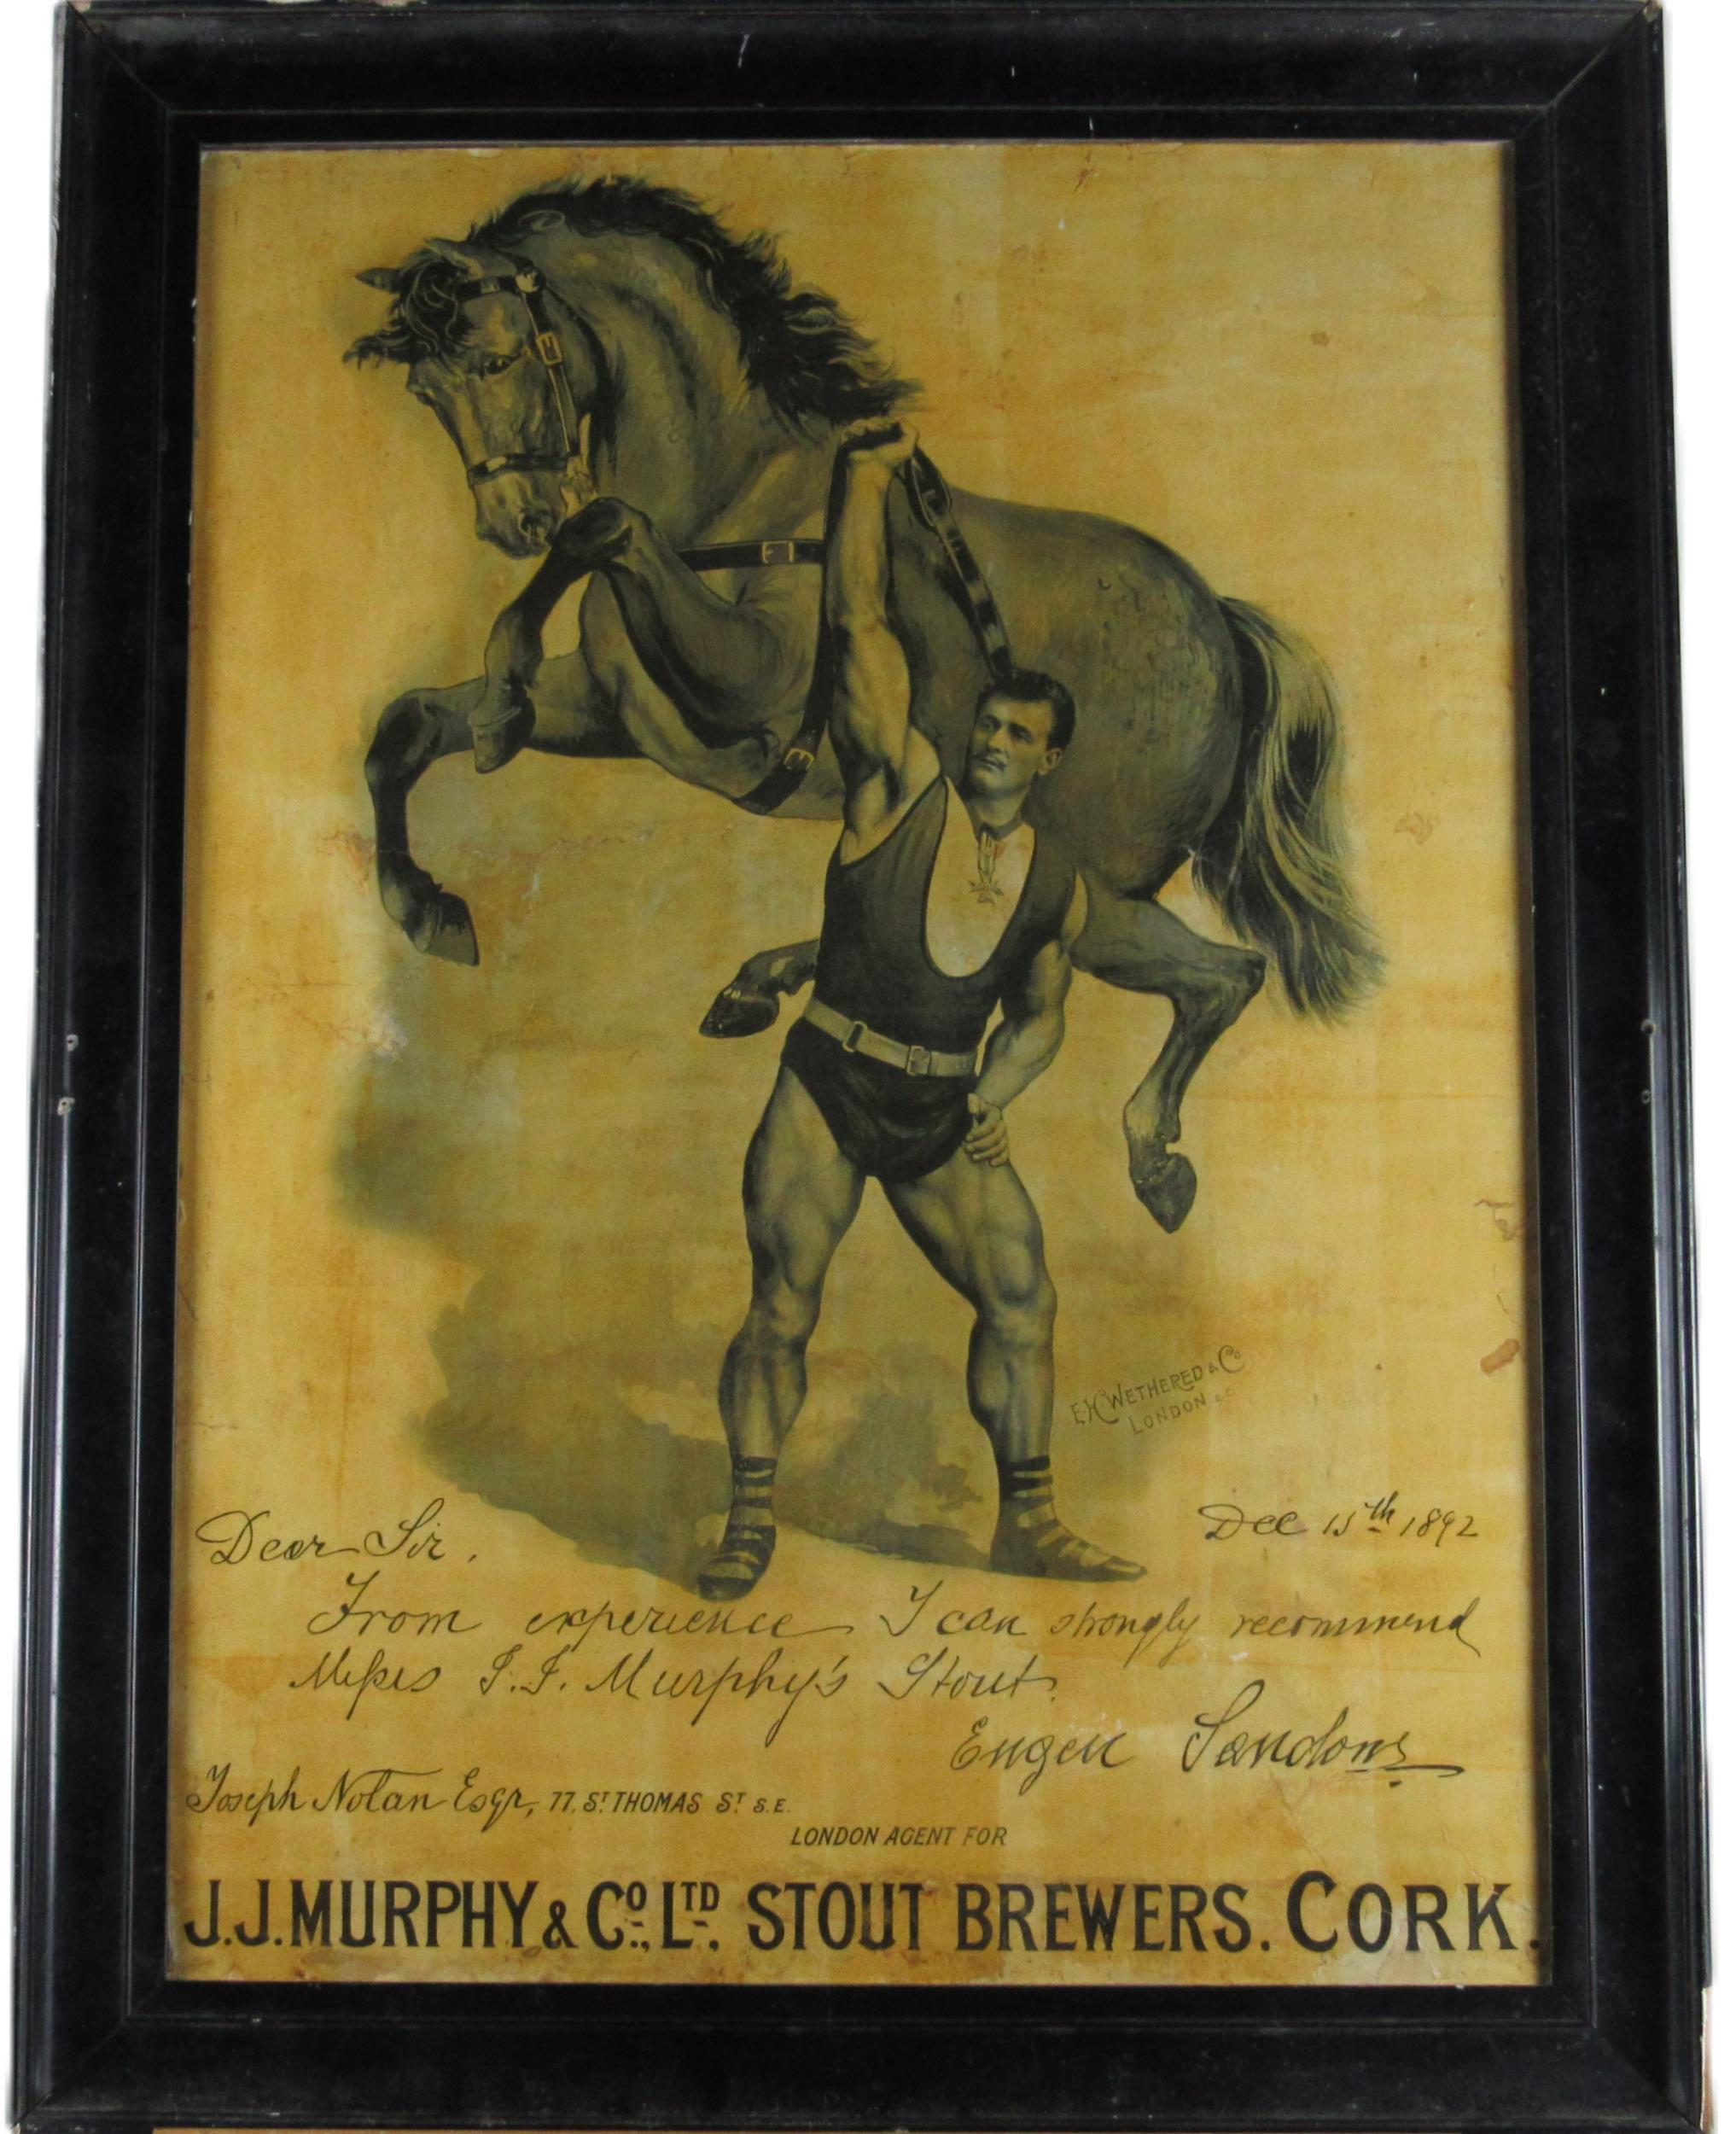 An original large printed Advertisement Poster, for "J.J. Murphy & Co., Ltd., Stout Brewers,